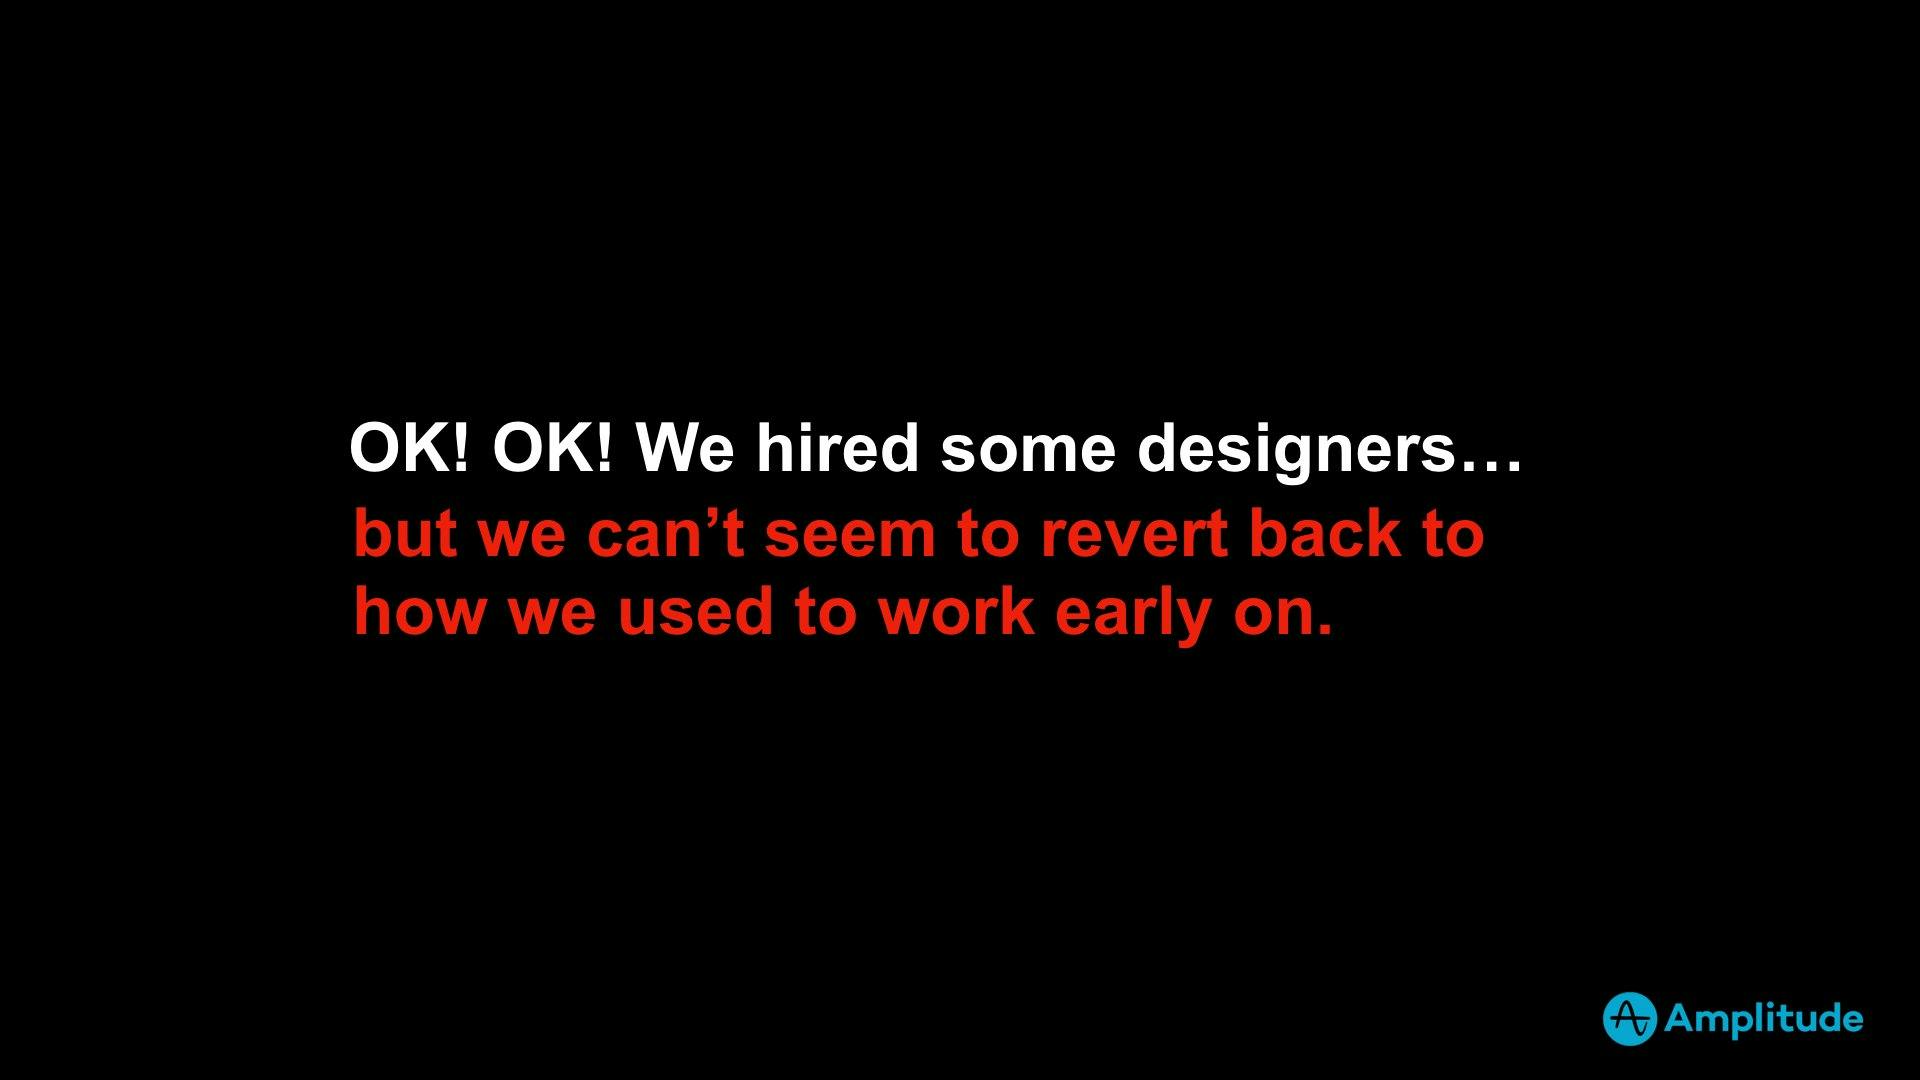 hiringmoredesigners